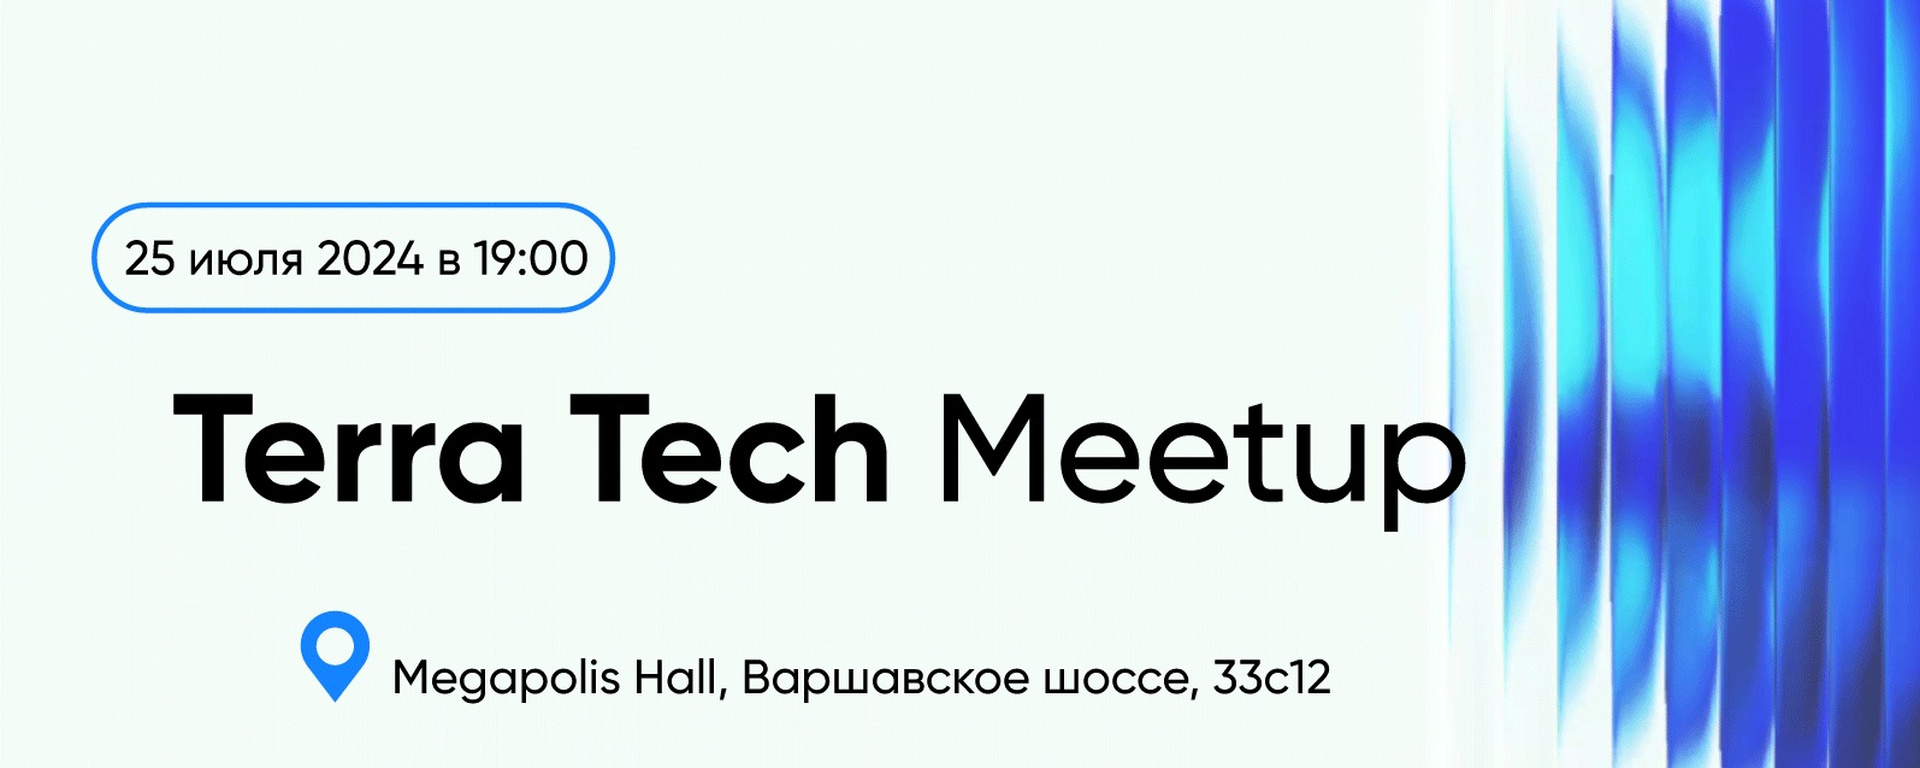 Обложка мероприятия Terra Tech Meetup